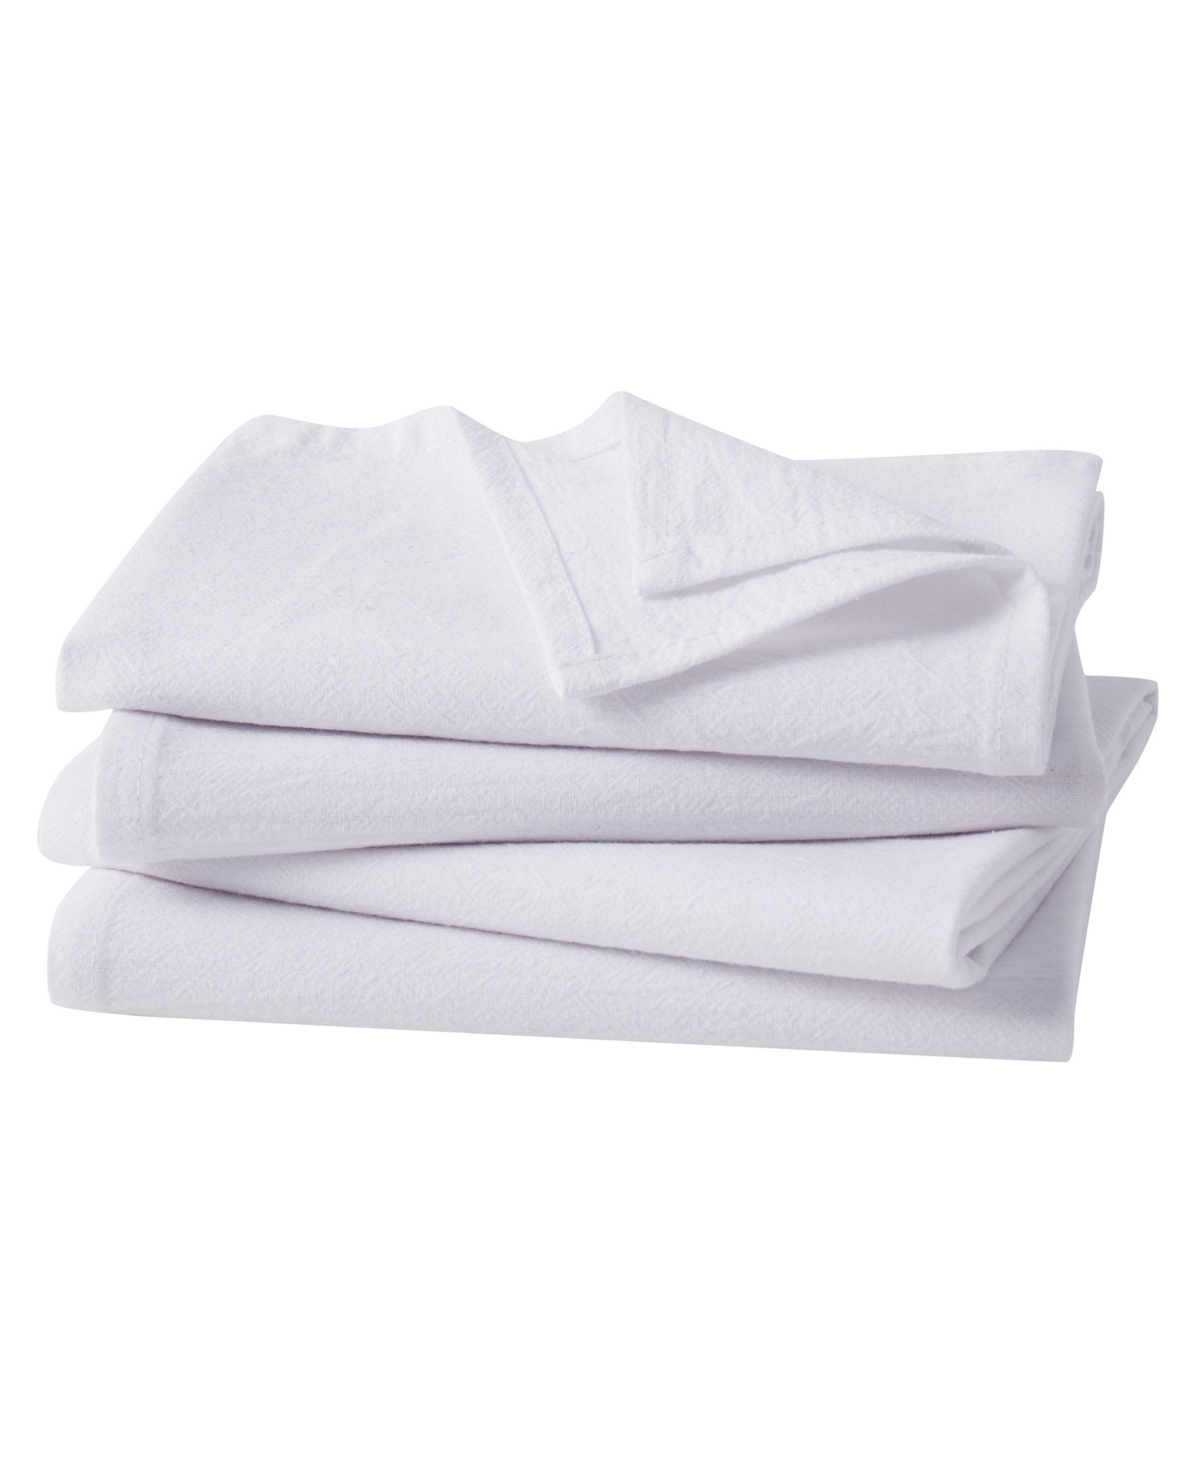 Flour Sack Kitchen Towel, Pack of 4 - White